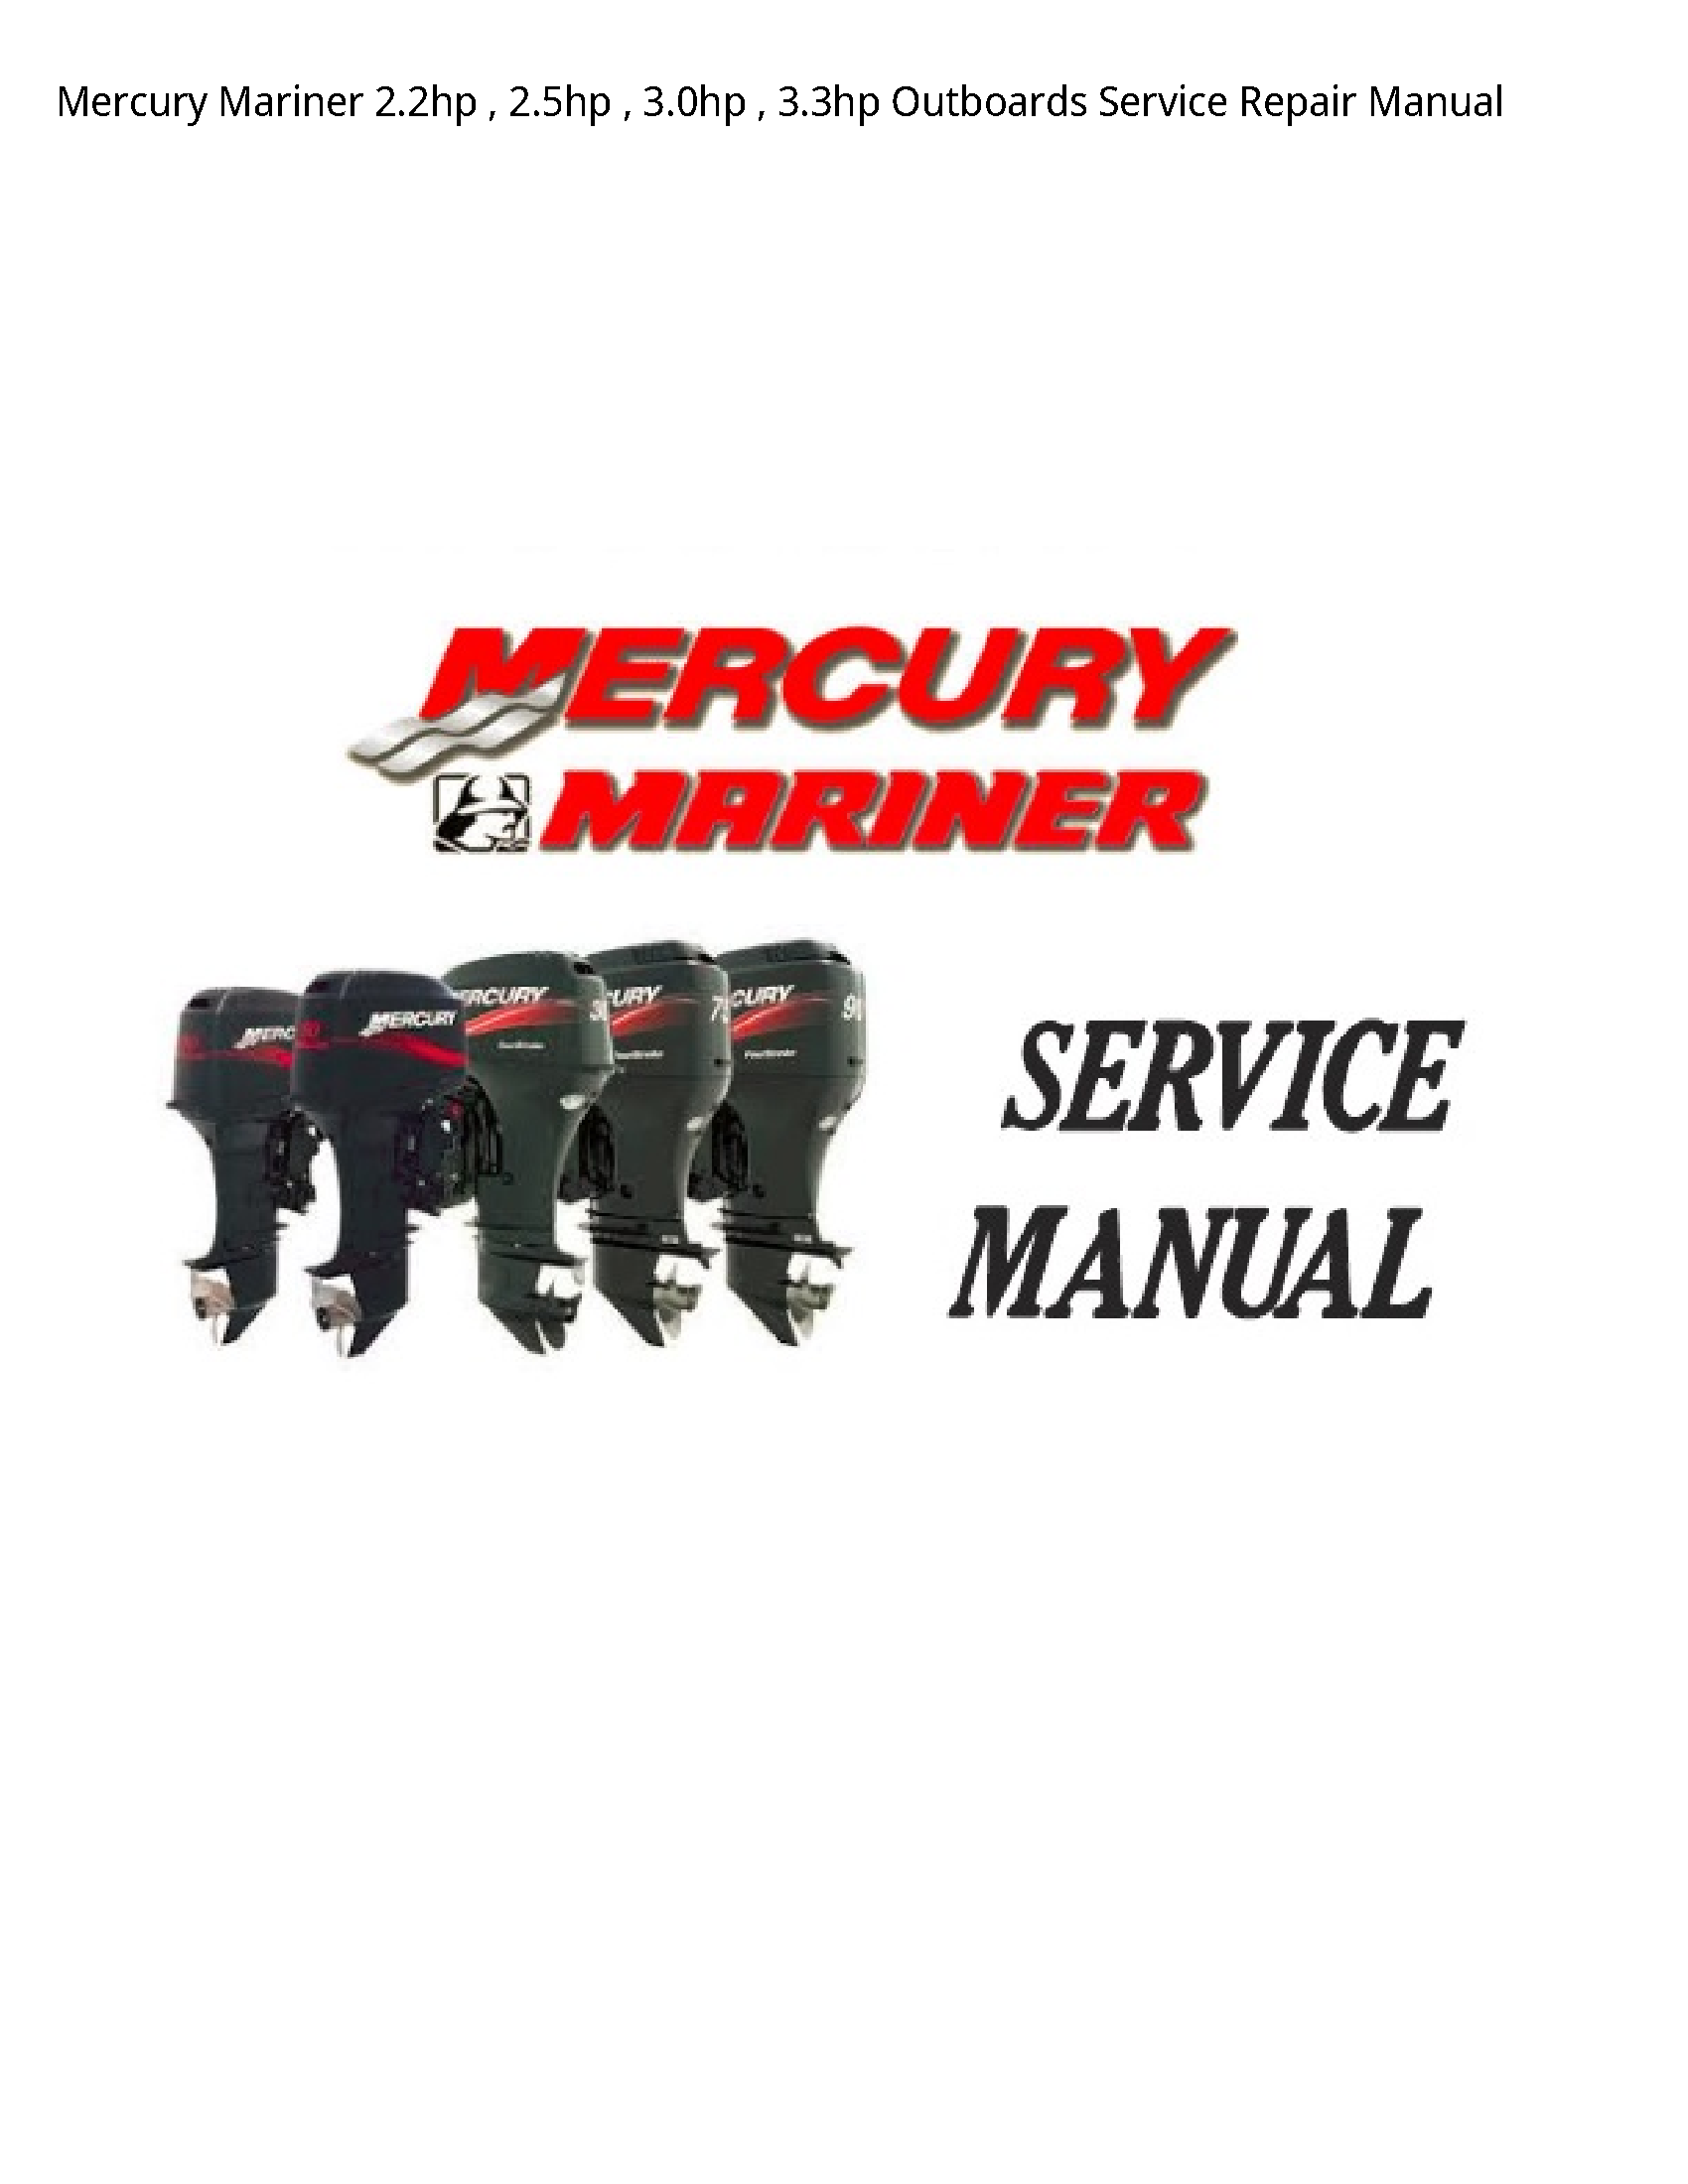 Mercury Mariner 2.2hp Outboards manual